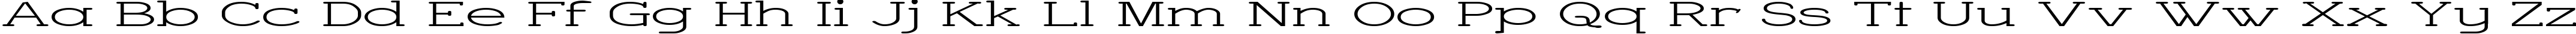 Пример написания английского алфавита шрифтом Charrington Superwide